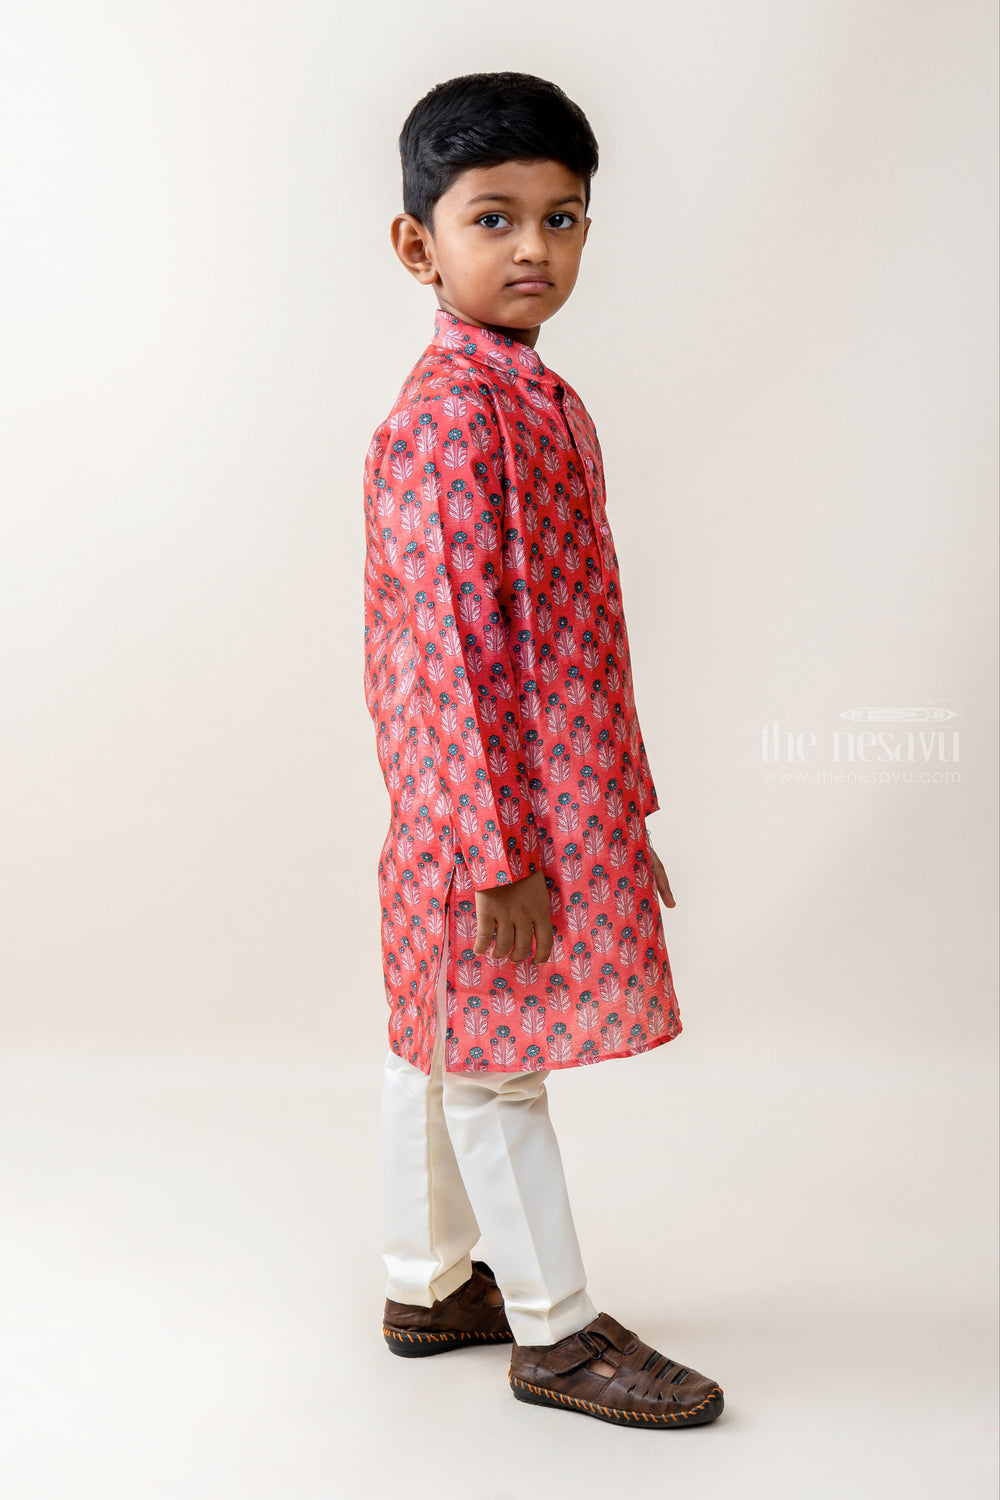 The Nesavu Ethnic Sets Flower And Leaf - Blended Cotton Red Shirt And Cotton Pant For Little Boys psr silks Nesavu